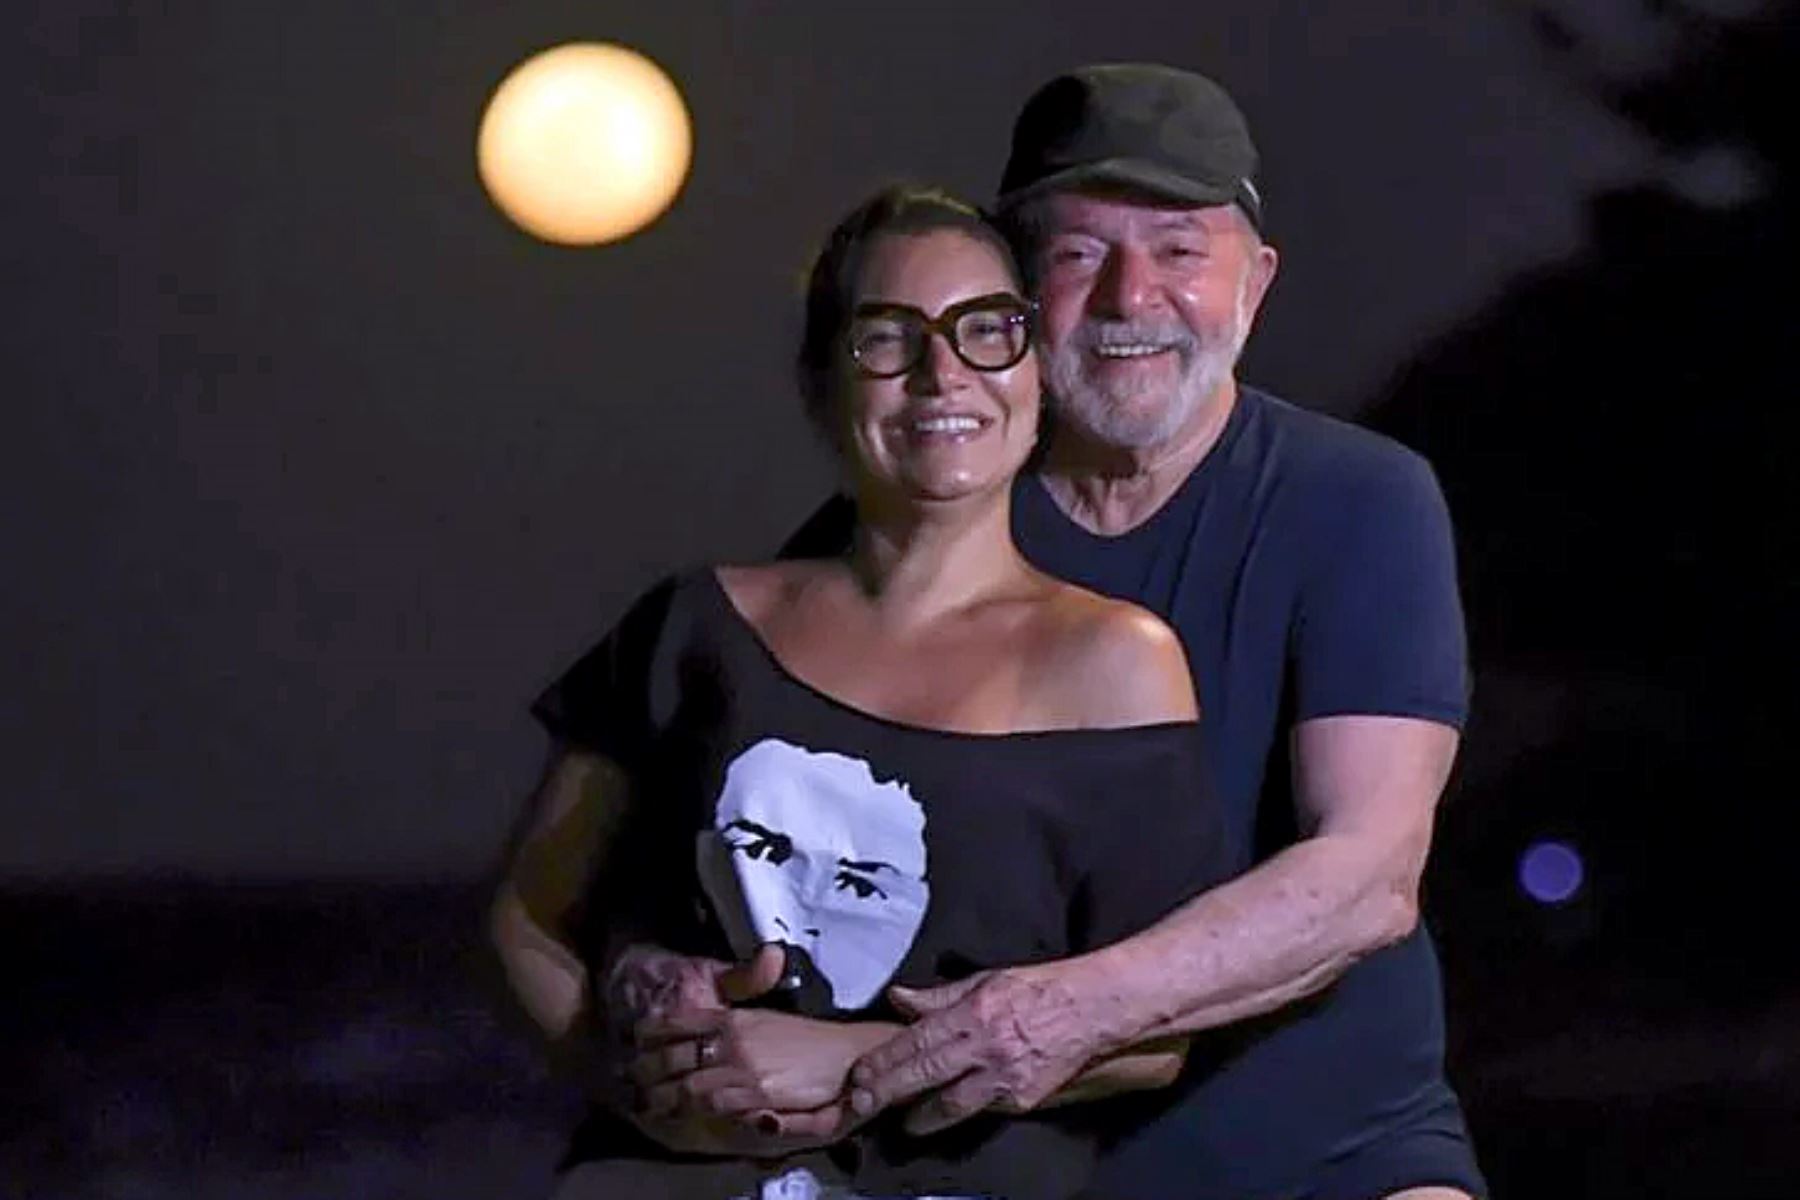 El expresidente de Brasil, Lula da Silva, contrajo matrimonio a pocos meses de las presidenciales donde buscará volver a ser presidente. Foto: Ricardo Stuckert